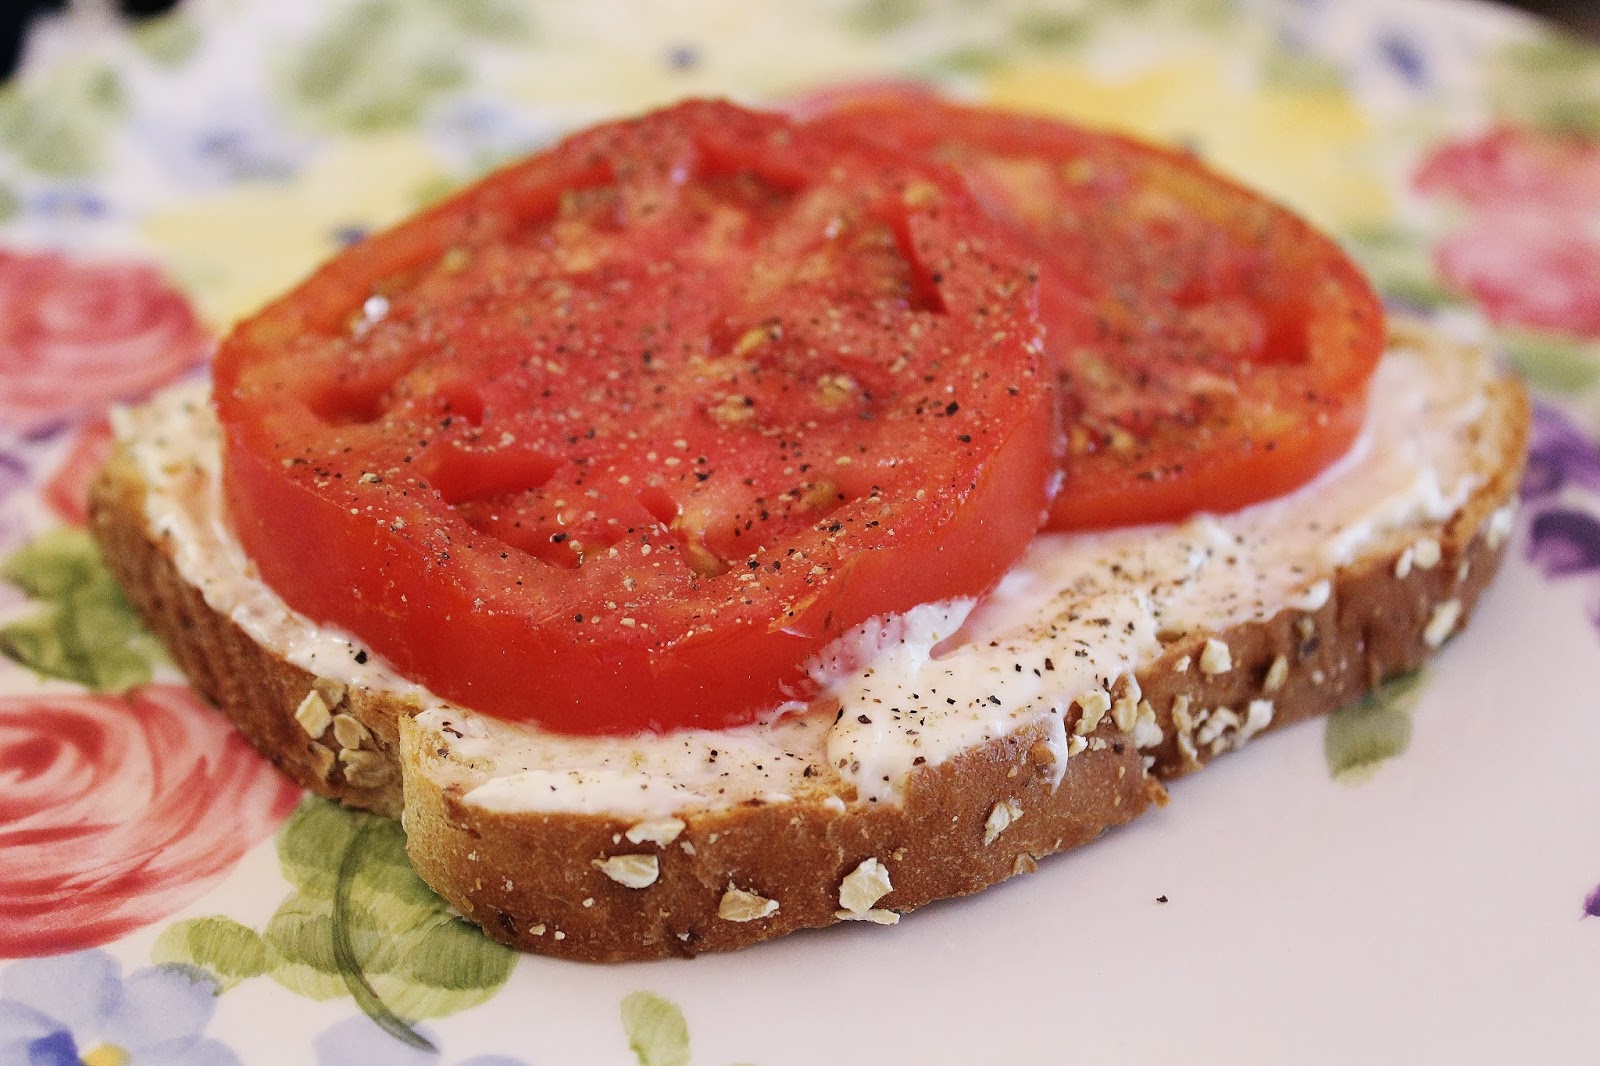 Ohio Thoughts: Summer Tomato Sandwich